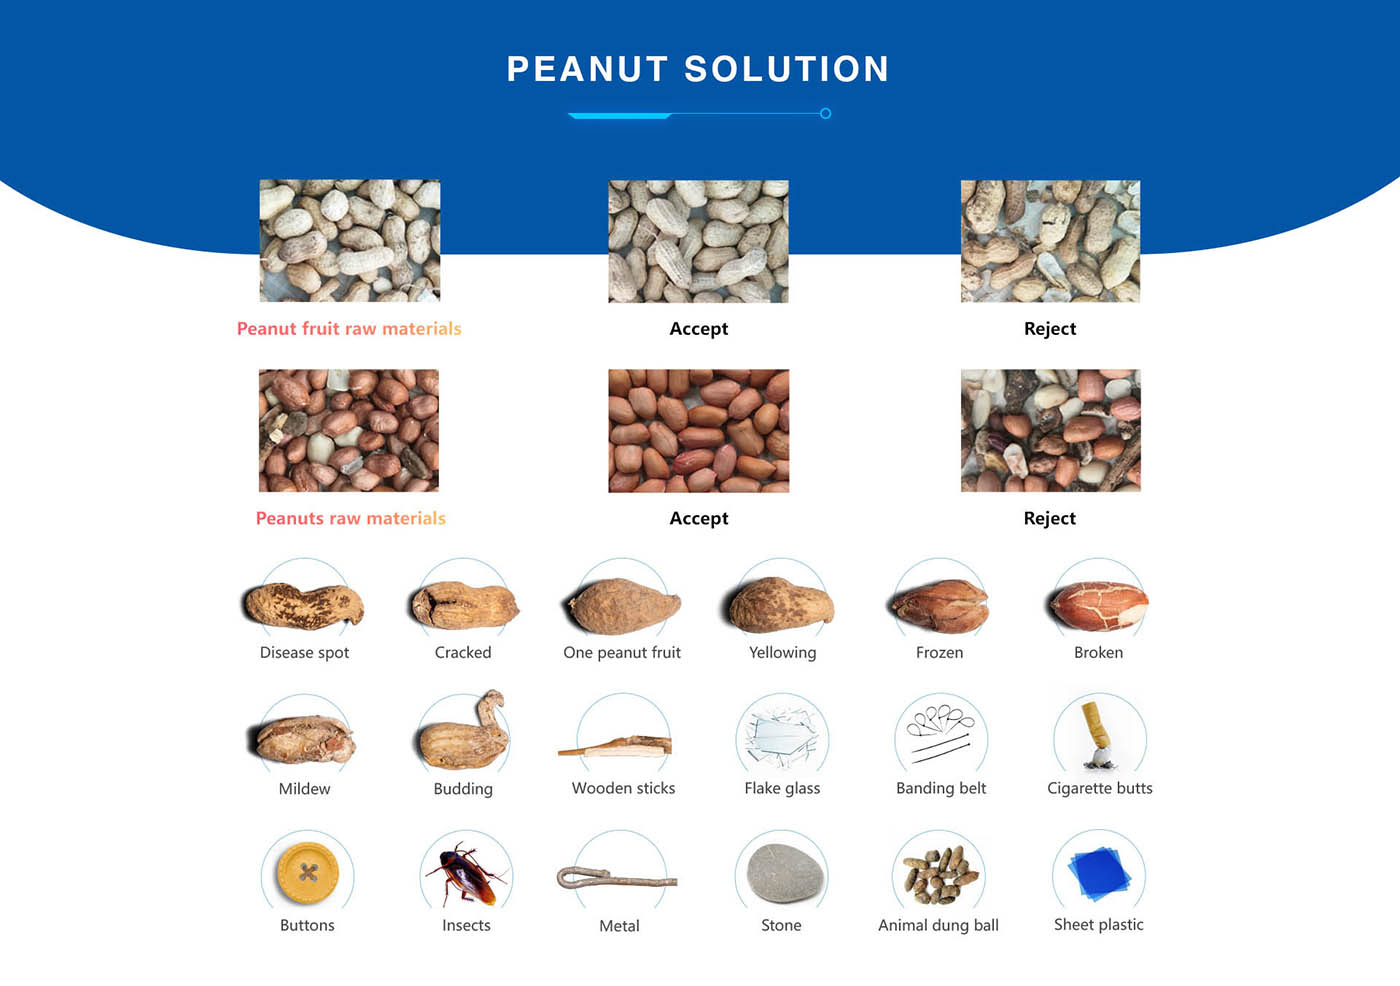 Peanuts solution